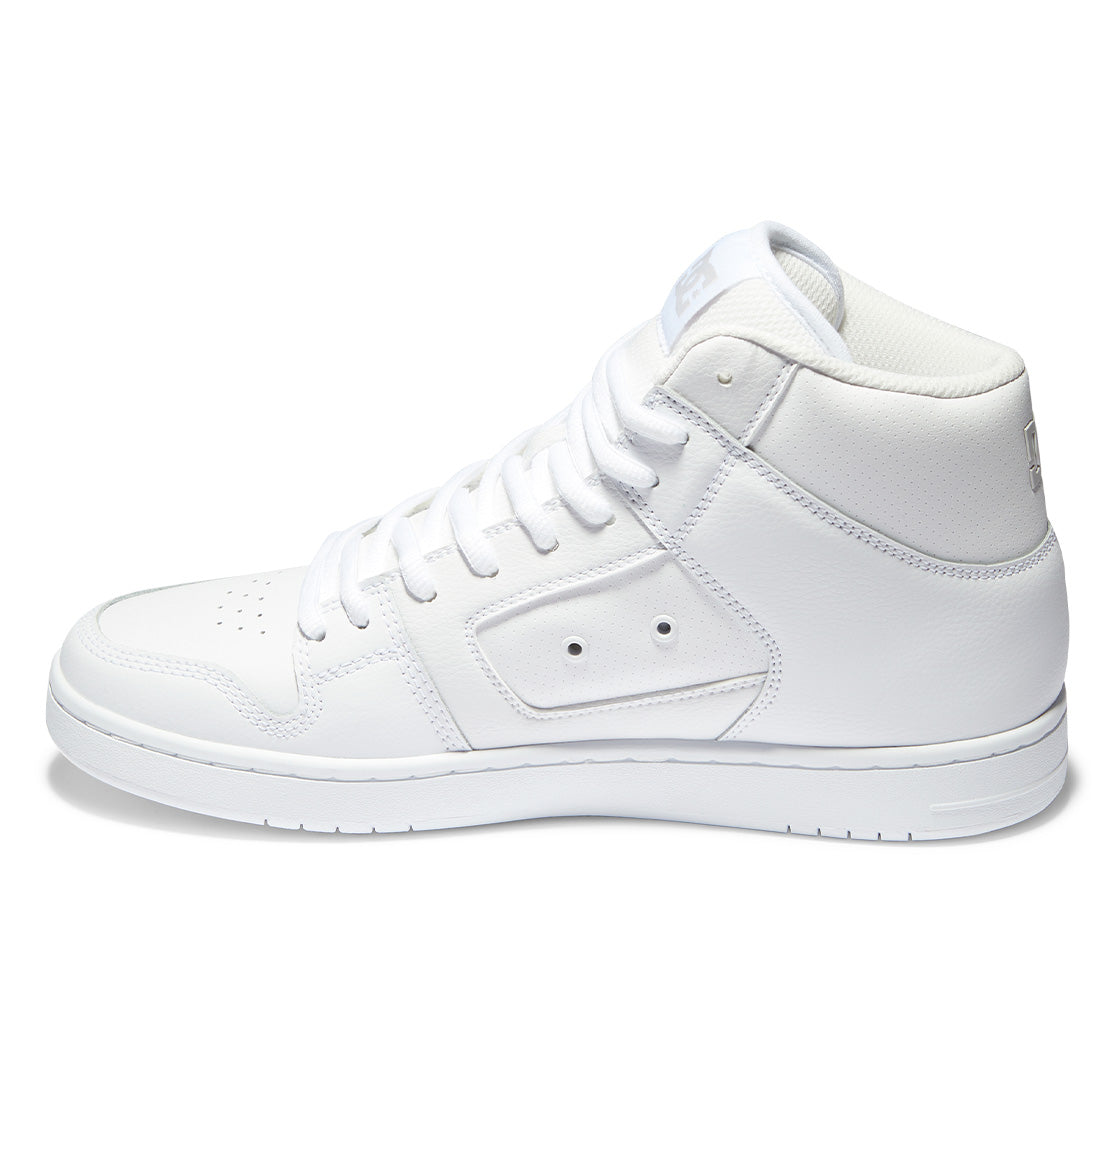 Men's Manteca 4 HI Shoes - White/White/Battleship